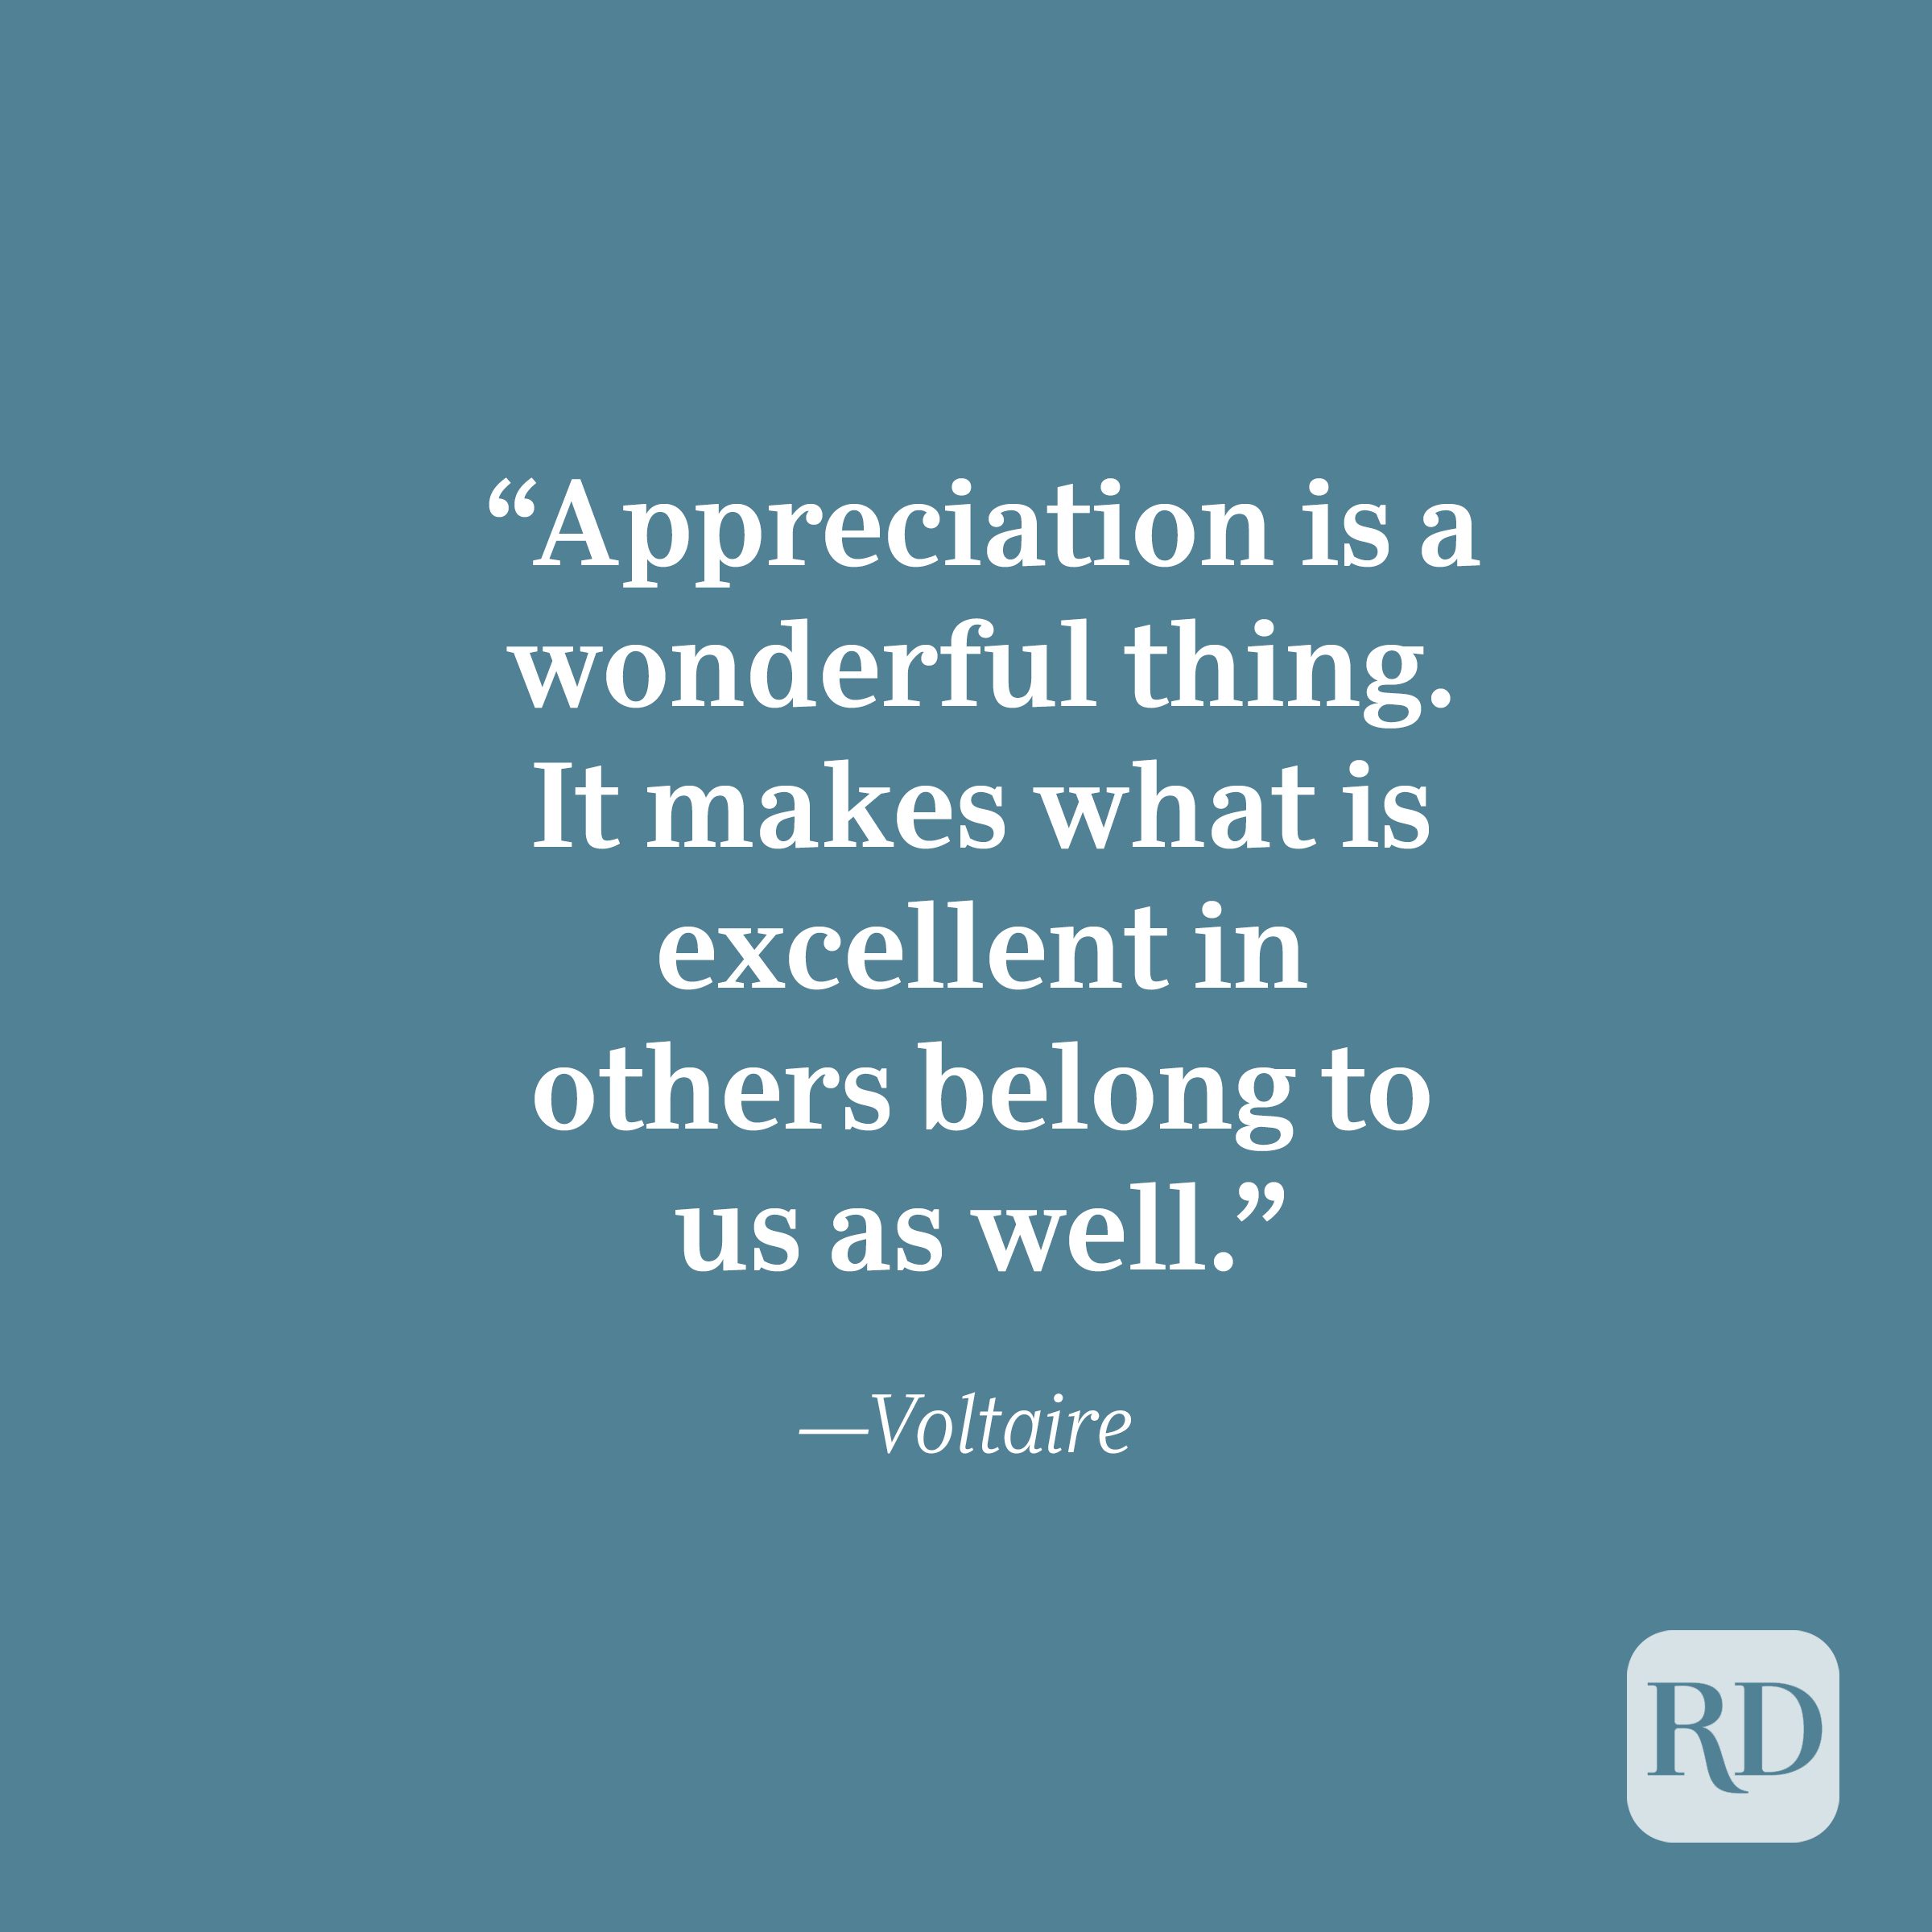 Voltaire quote about gratitude.